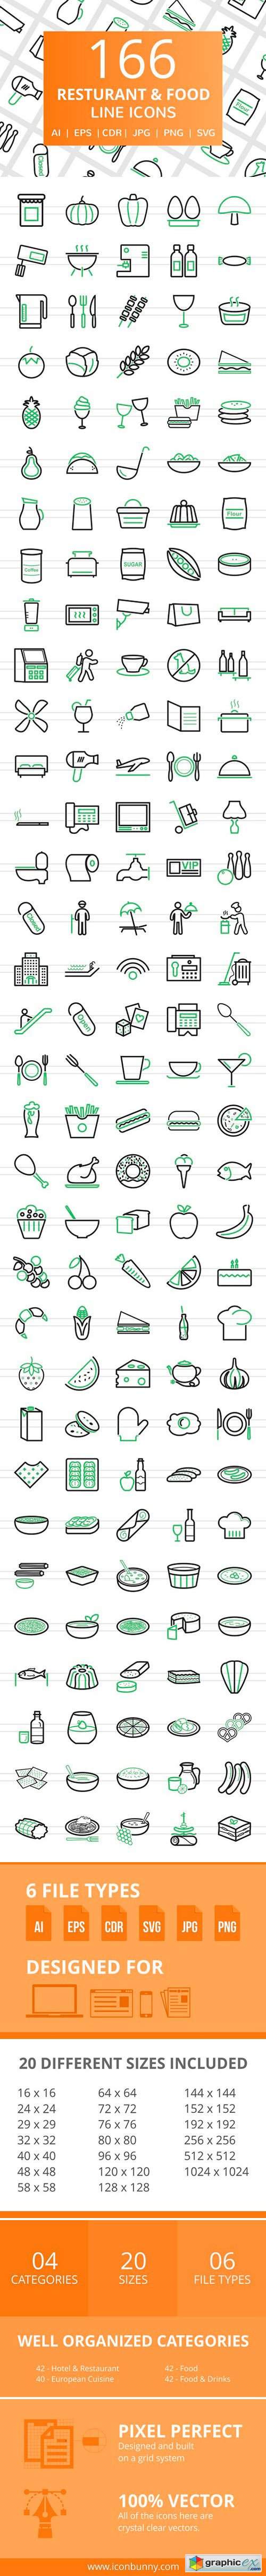 166 Restaurant & Food Line Icons